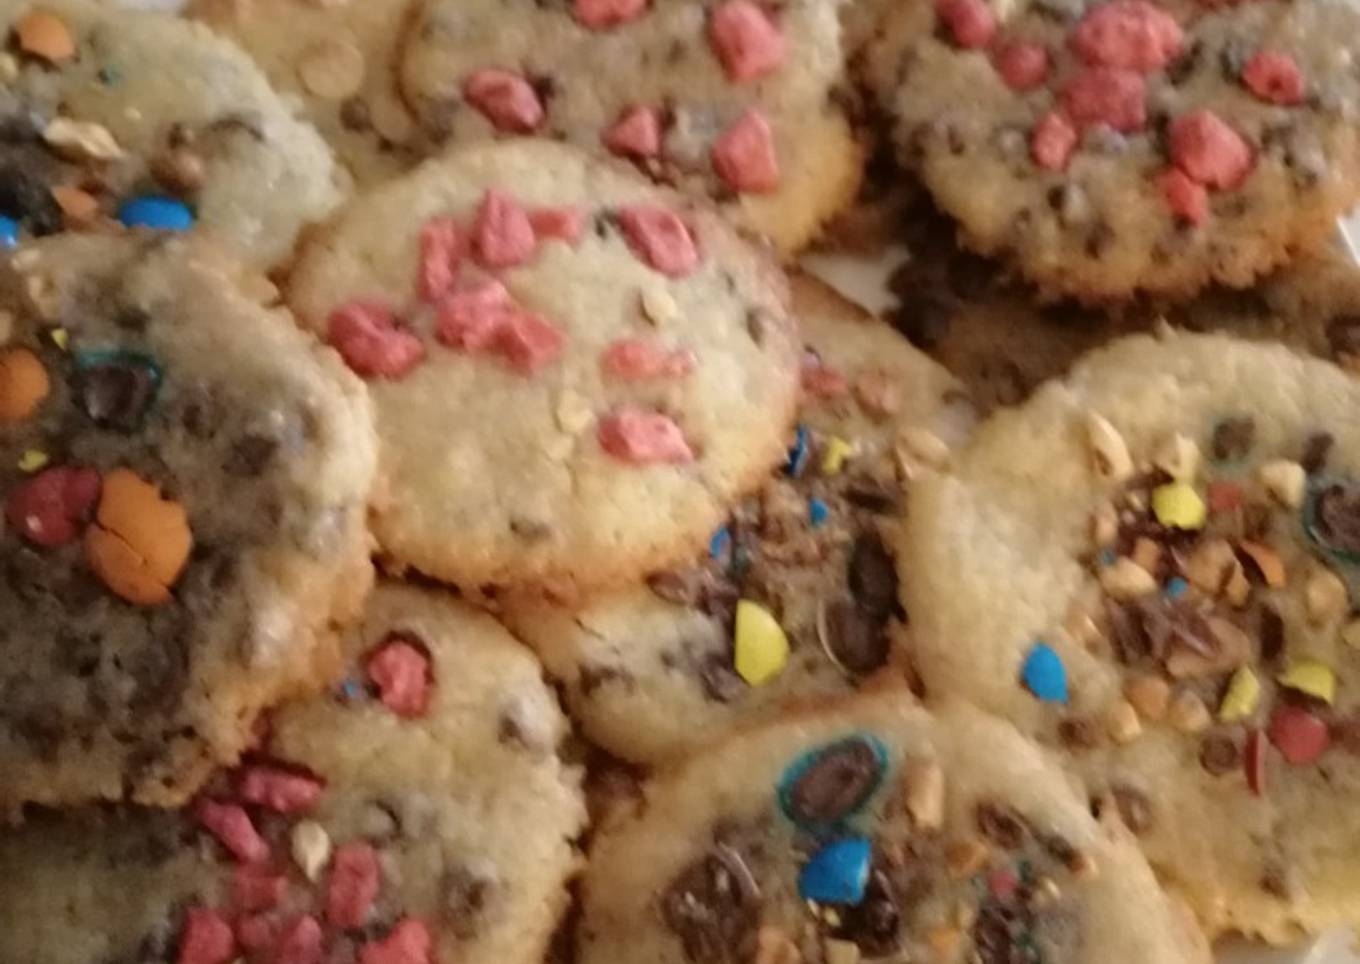 Cookies gourmands